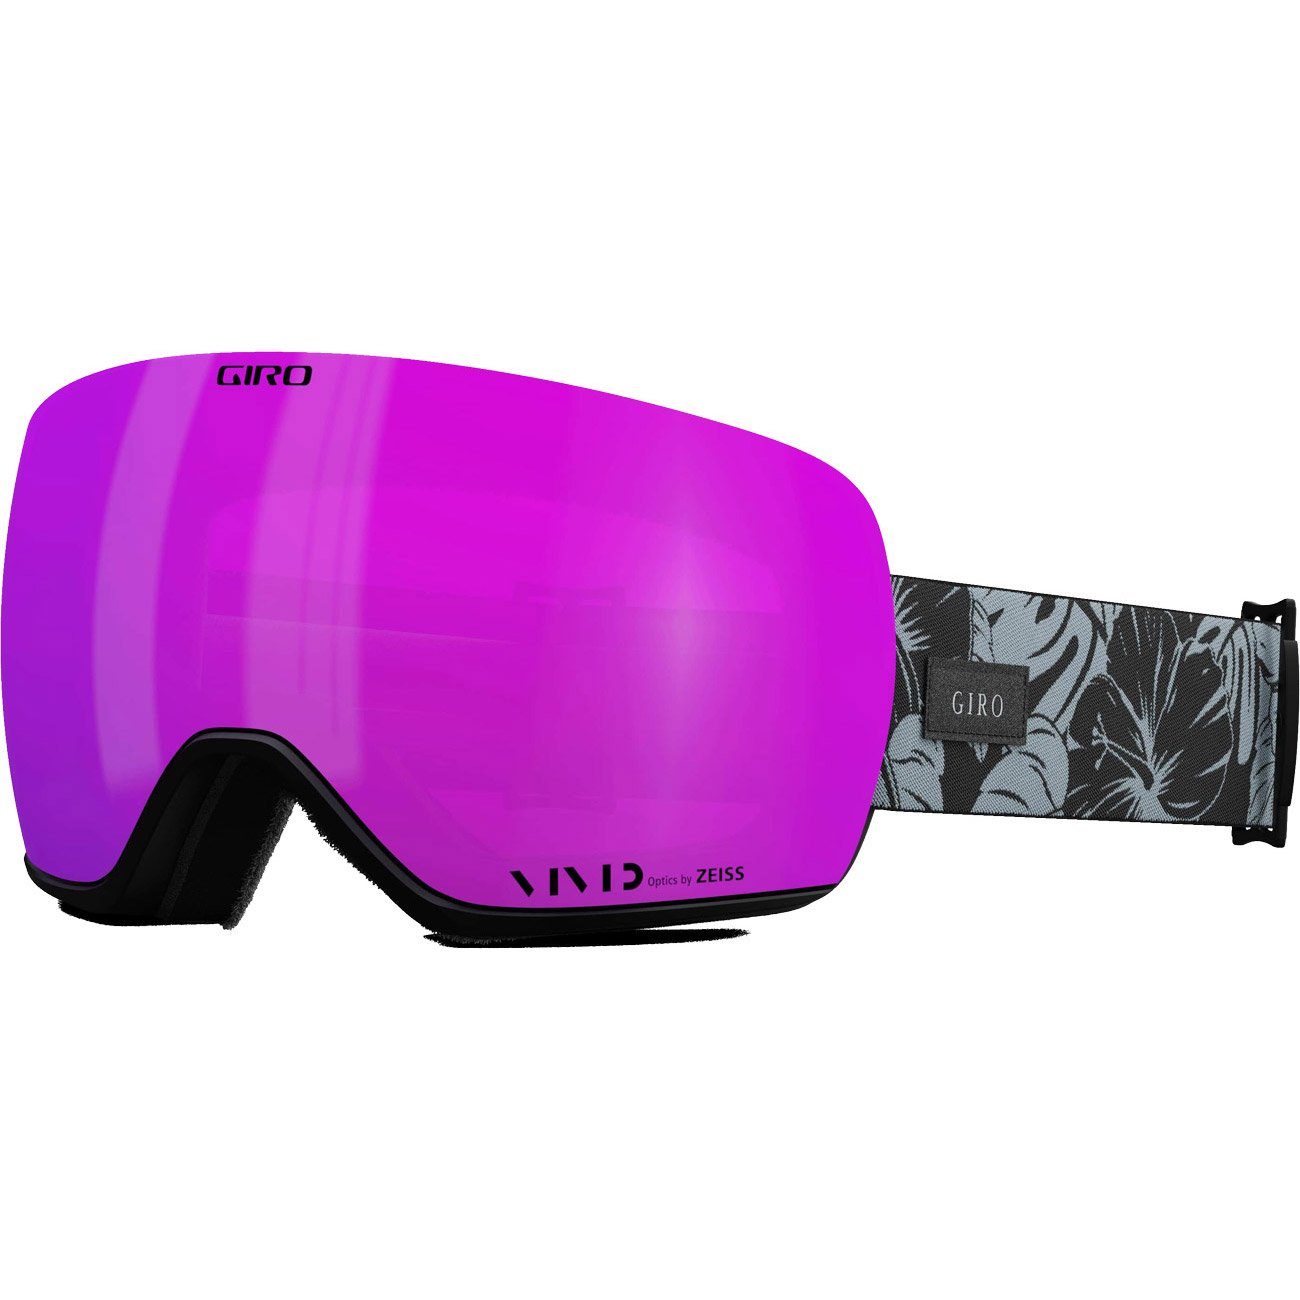 Giro Snowboardbrille, ArticleII black & grey botanical lx // vivid